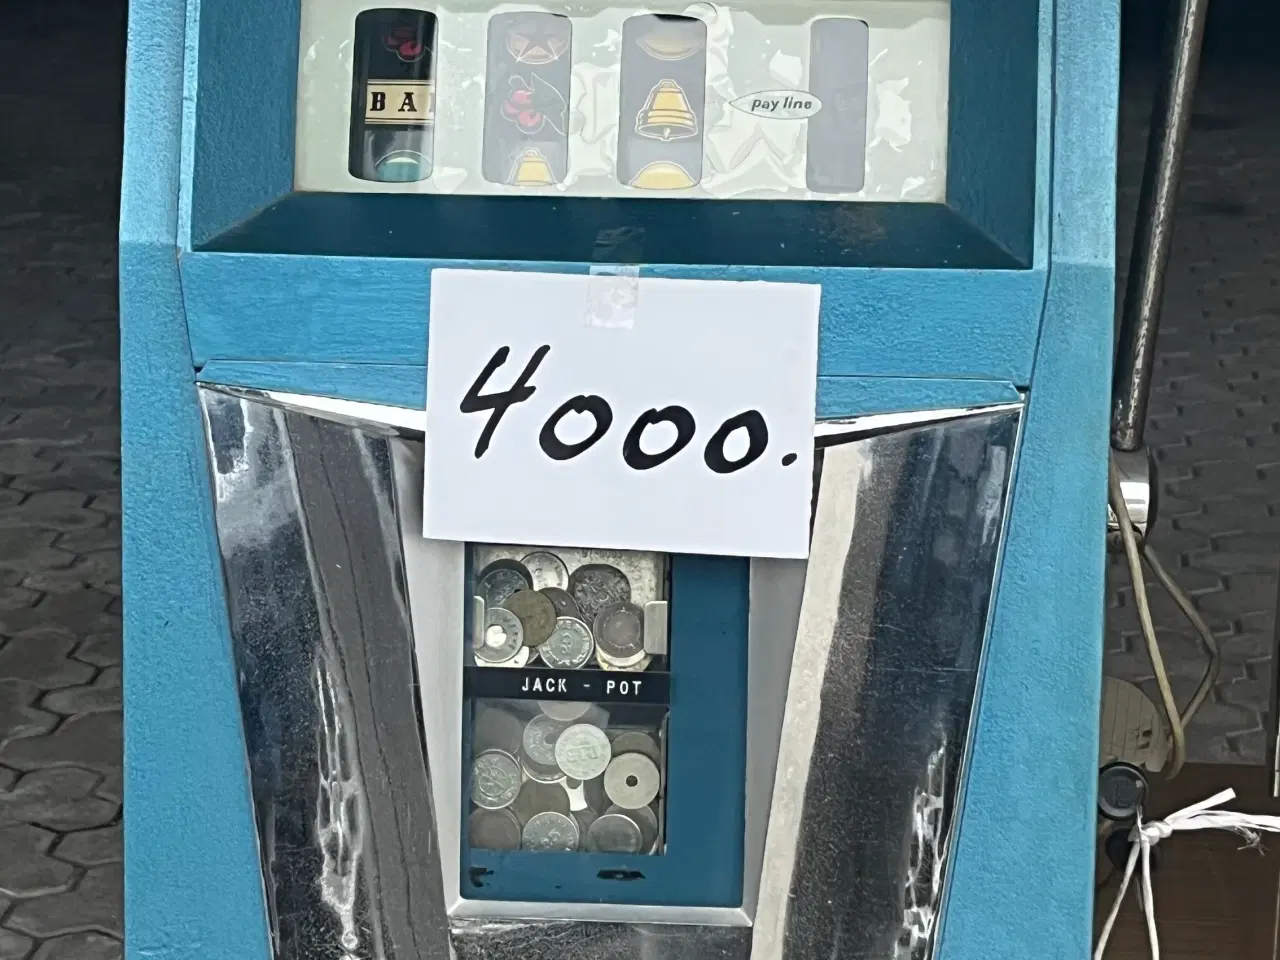 Billede 6 - Hobby og sjovt spilleautomat osv